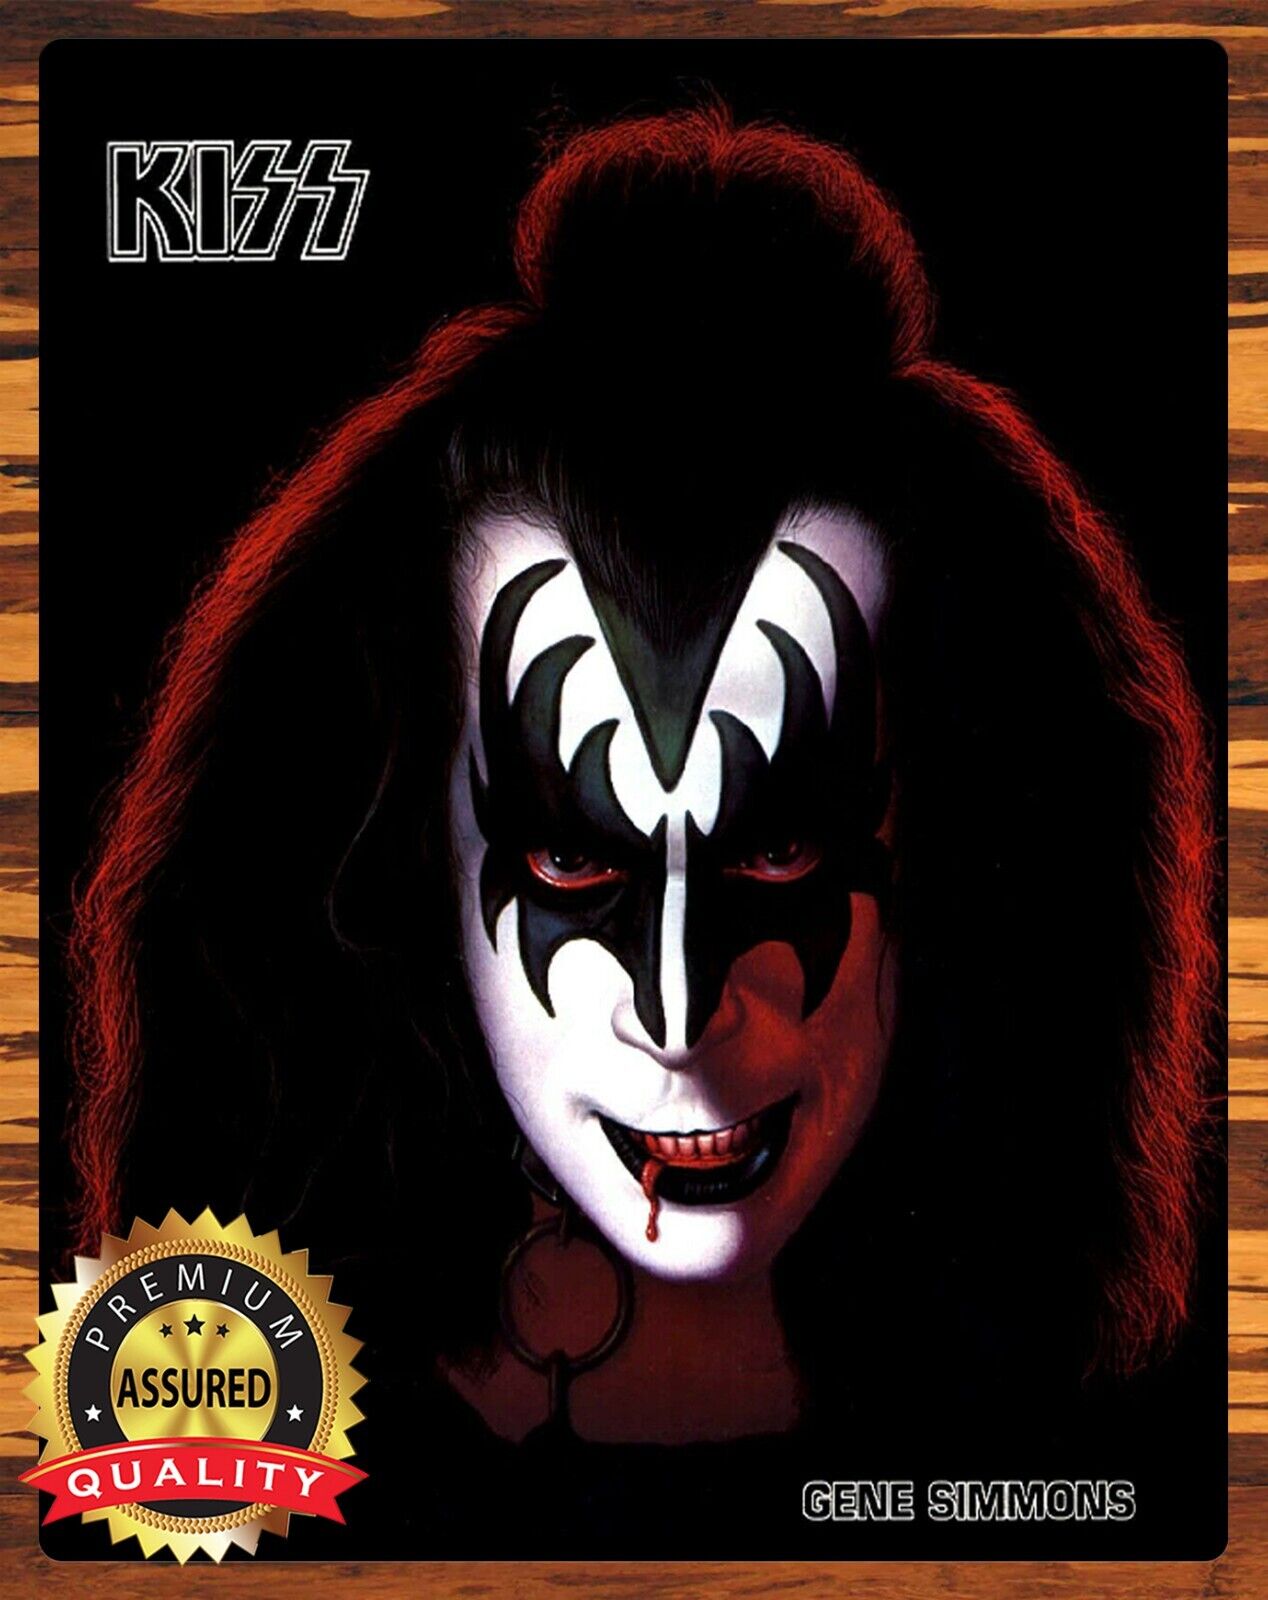 KISS - Gene Simmons - The Demon - Metal Sign 11 x 14